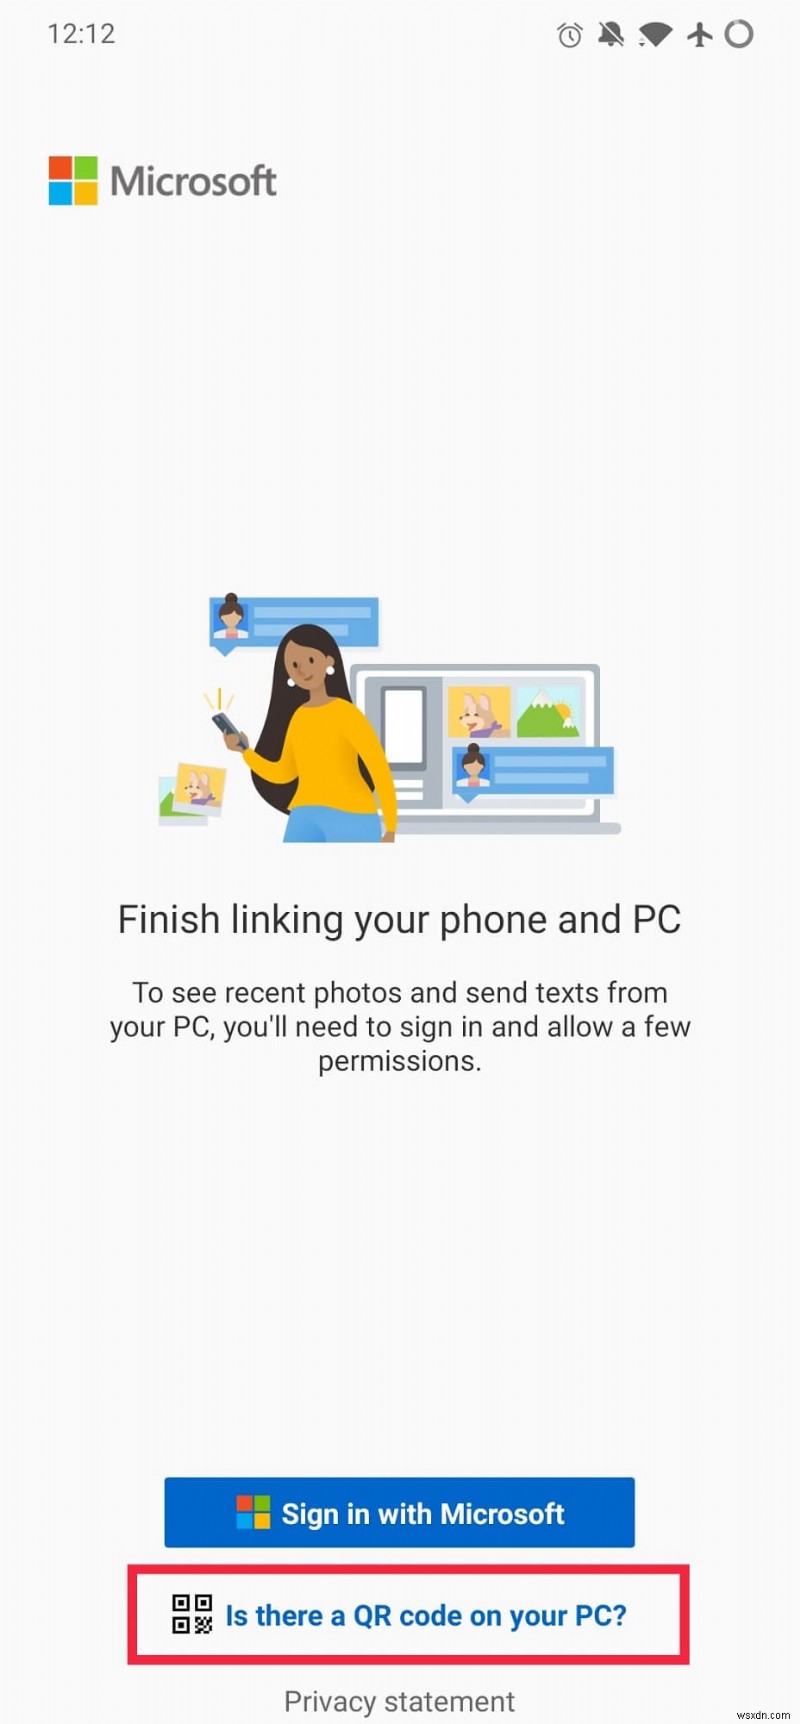 Windows 10의 YourPhone.exe 프로세스란 무엇입니까? 비활성화하는 방법은 무엇입니까?